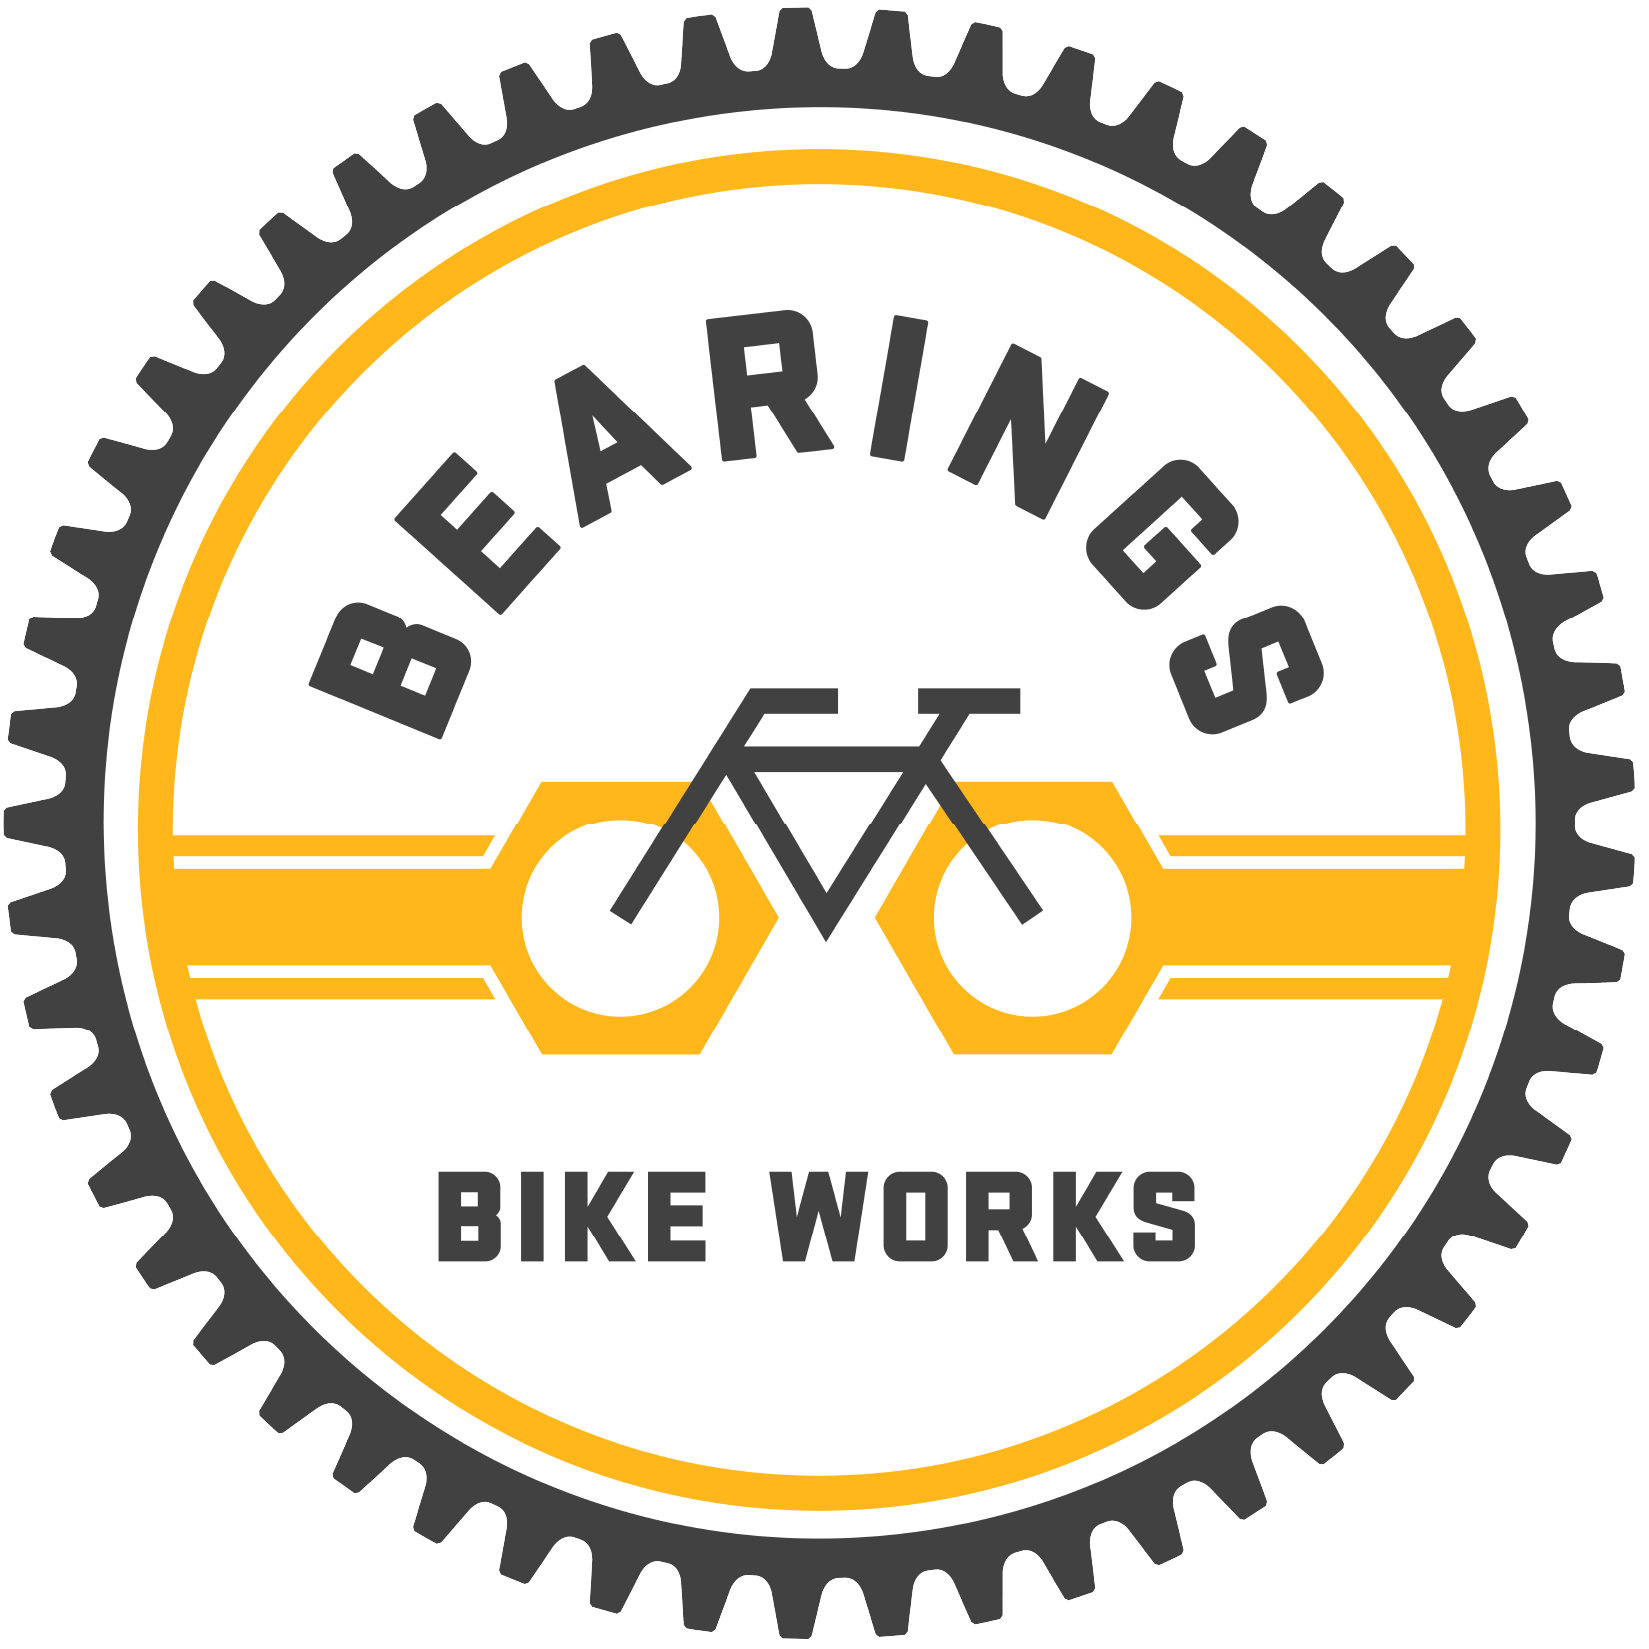 Bearings Bike Works